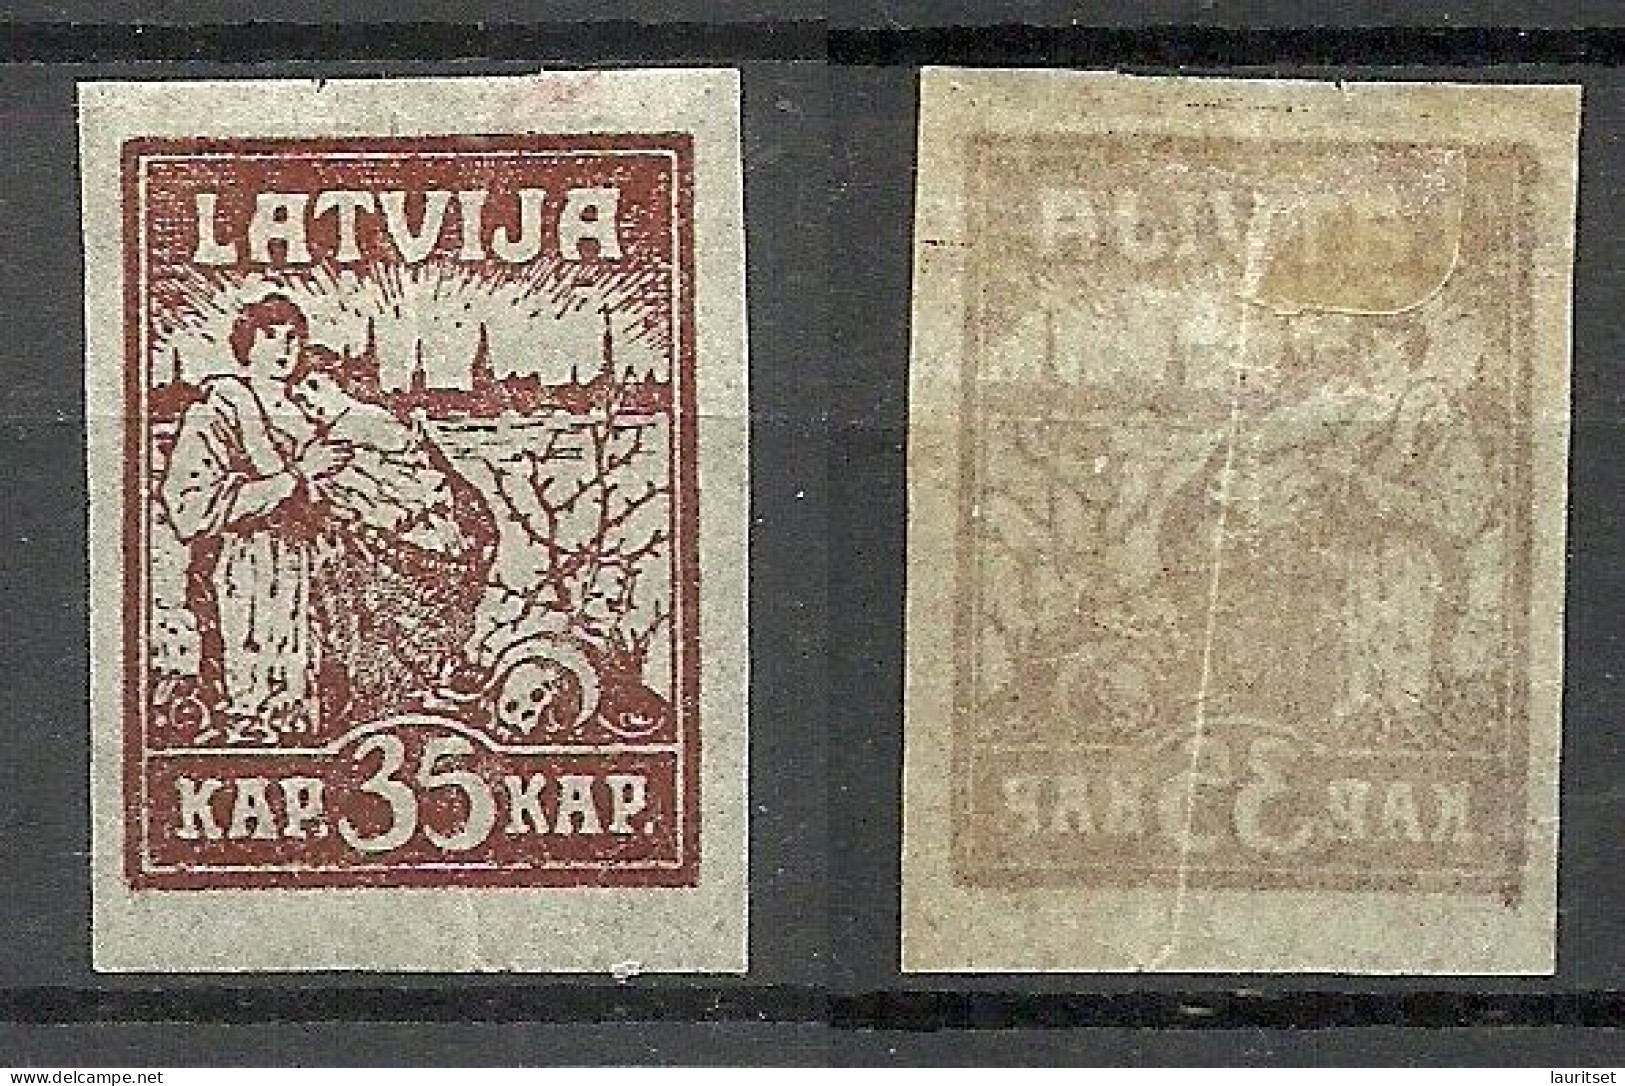 LETTLAND Latvia 1919 Michel 27 Y Zigarettenpapier Pelure Paper * NB! Light Vertical Fold Mark! - Lettonie